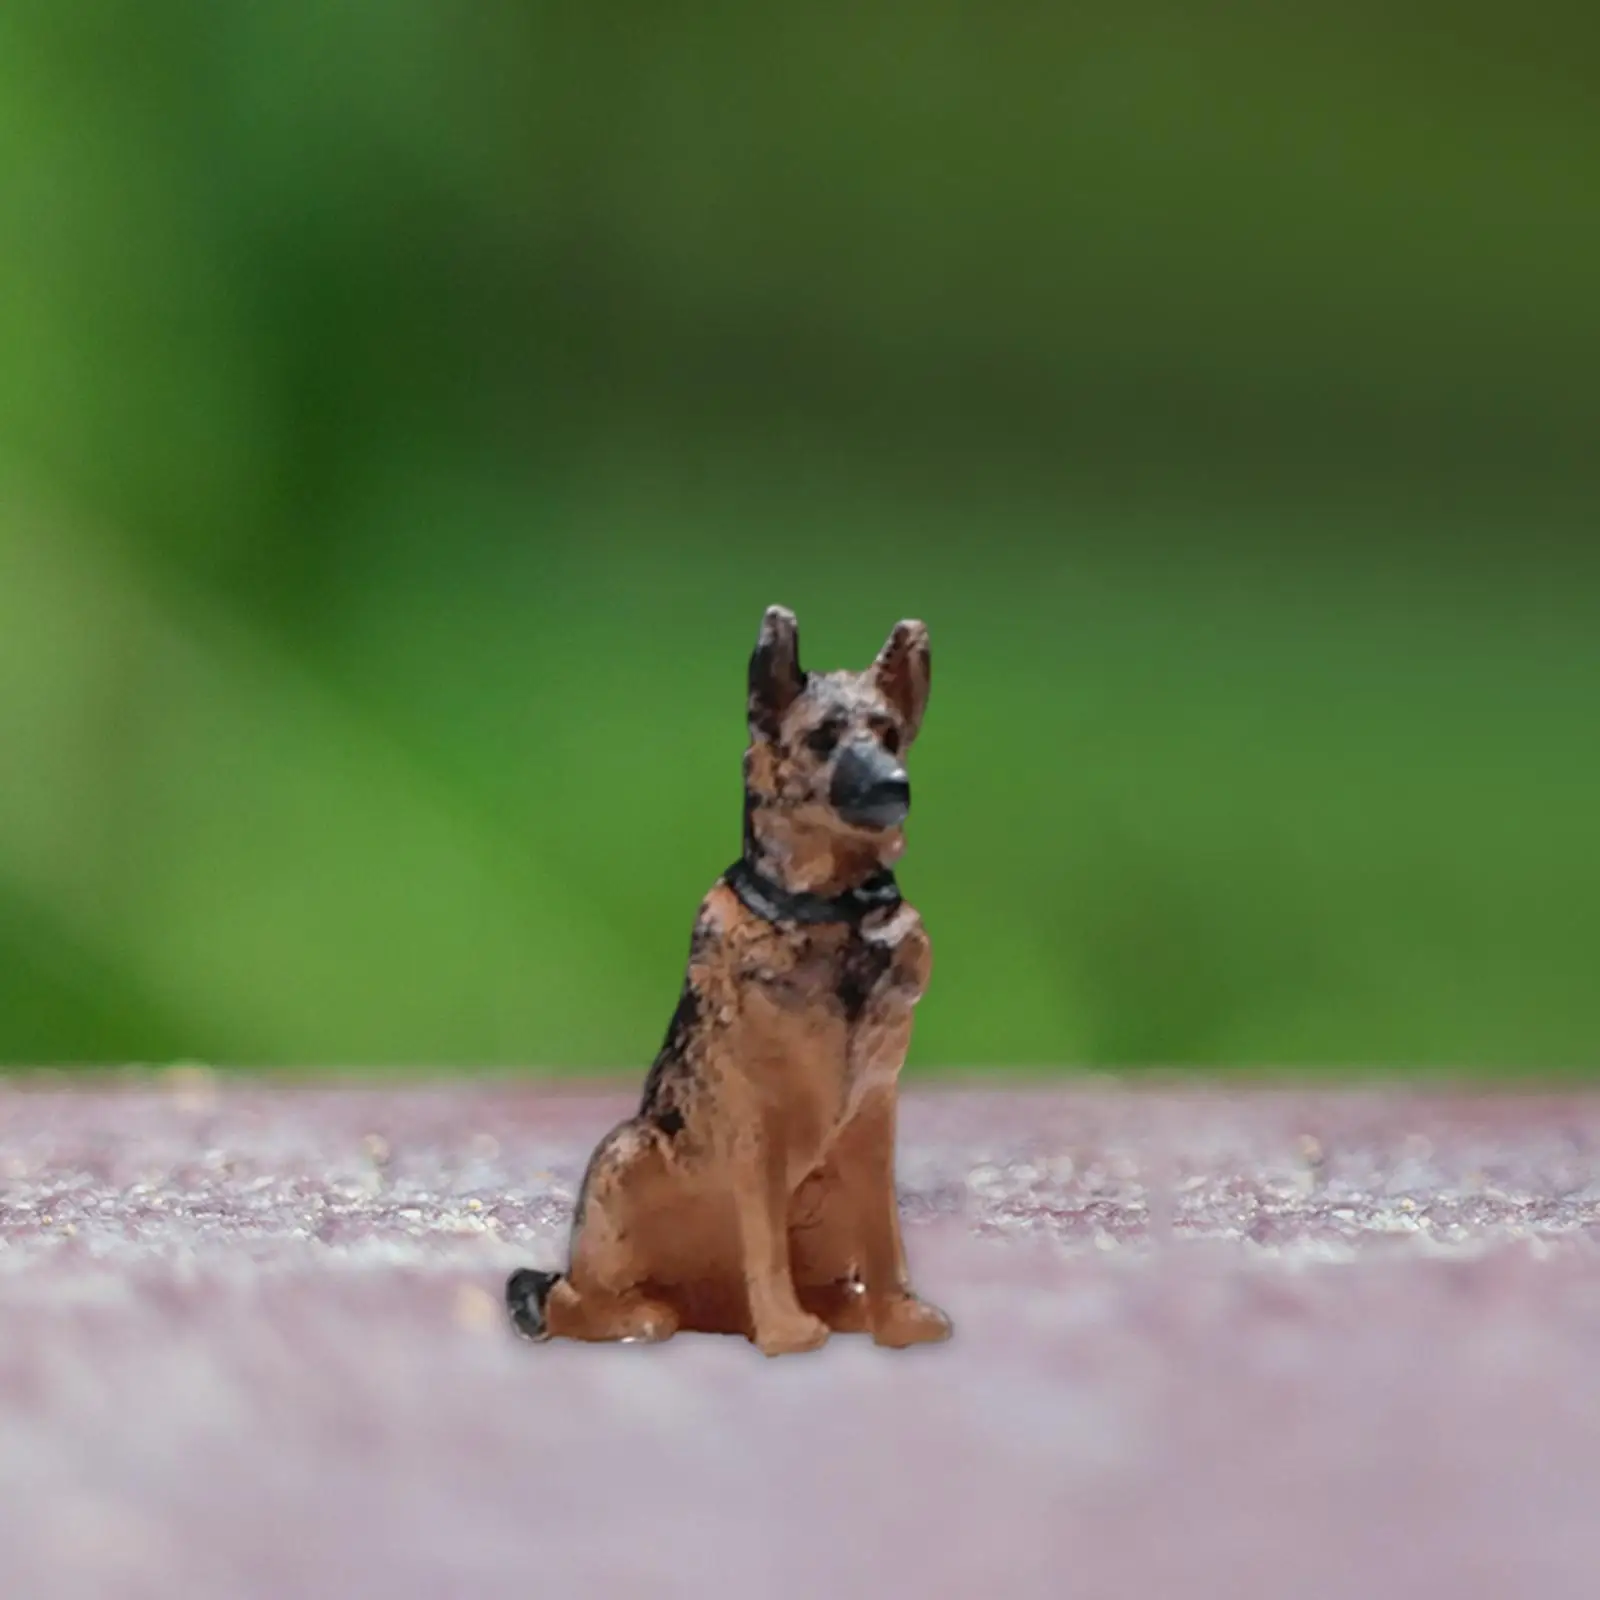 1/64 Dog Figures Fairy Garden Collections DIY Projects Micro Landscape S Gauge Miniature Scenes Diorama Scenery Decor